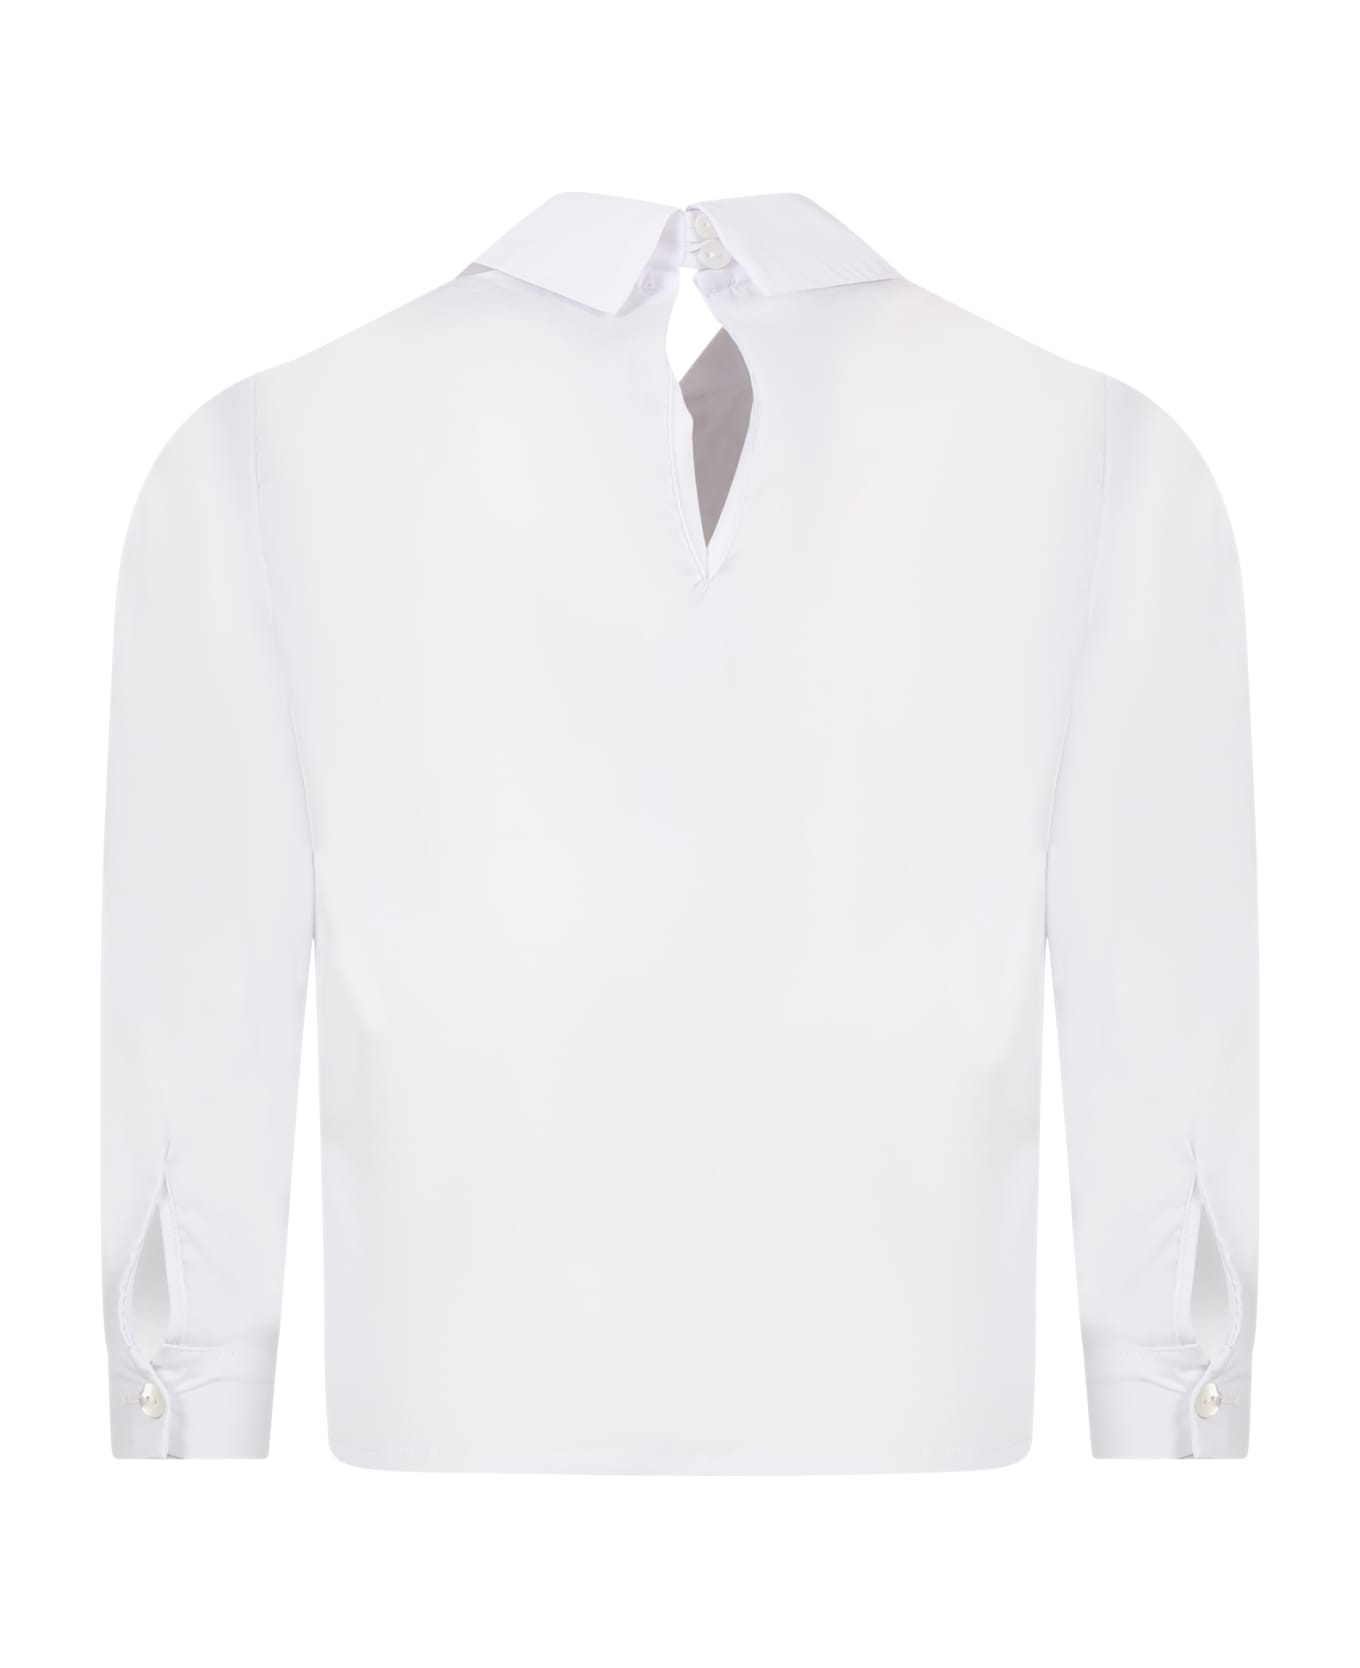 Simonetta White Shirt For Girl With Bow - White